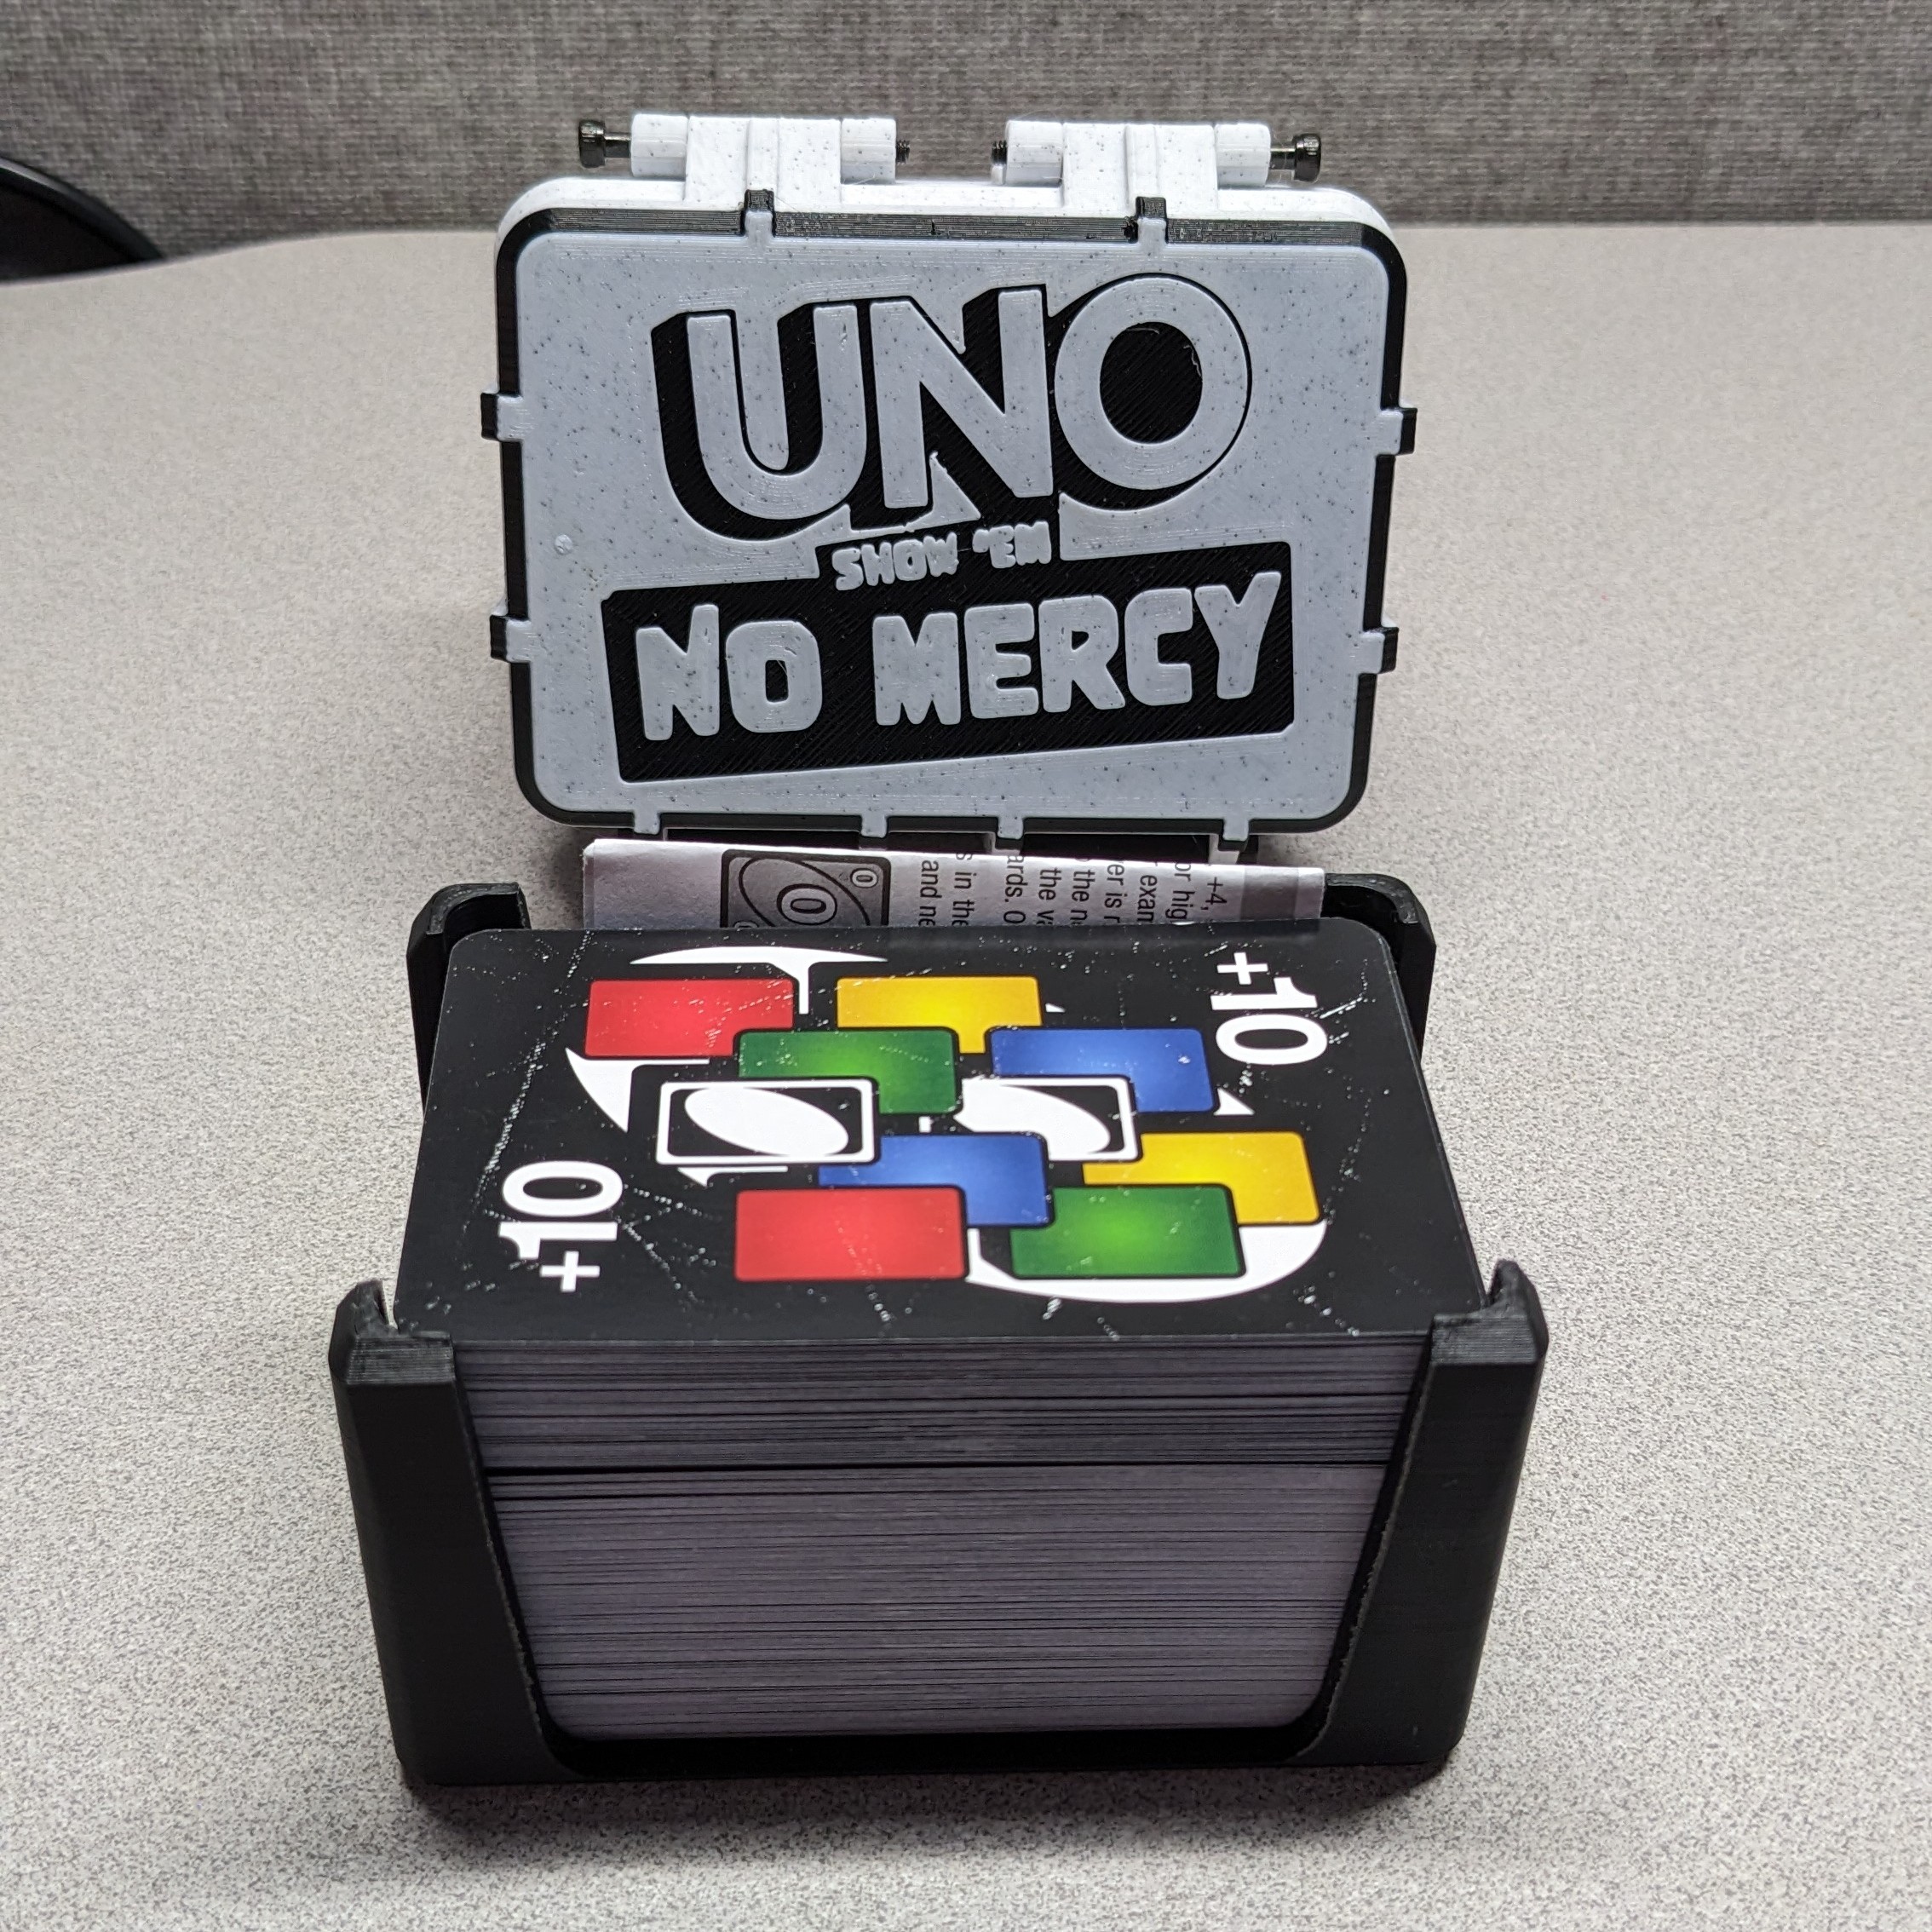 UNO Show 'Em No Mercy Unboxing 